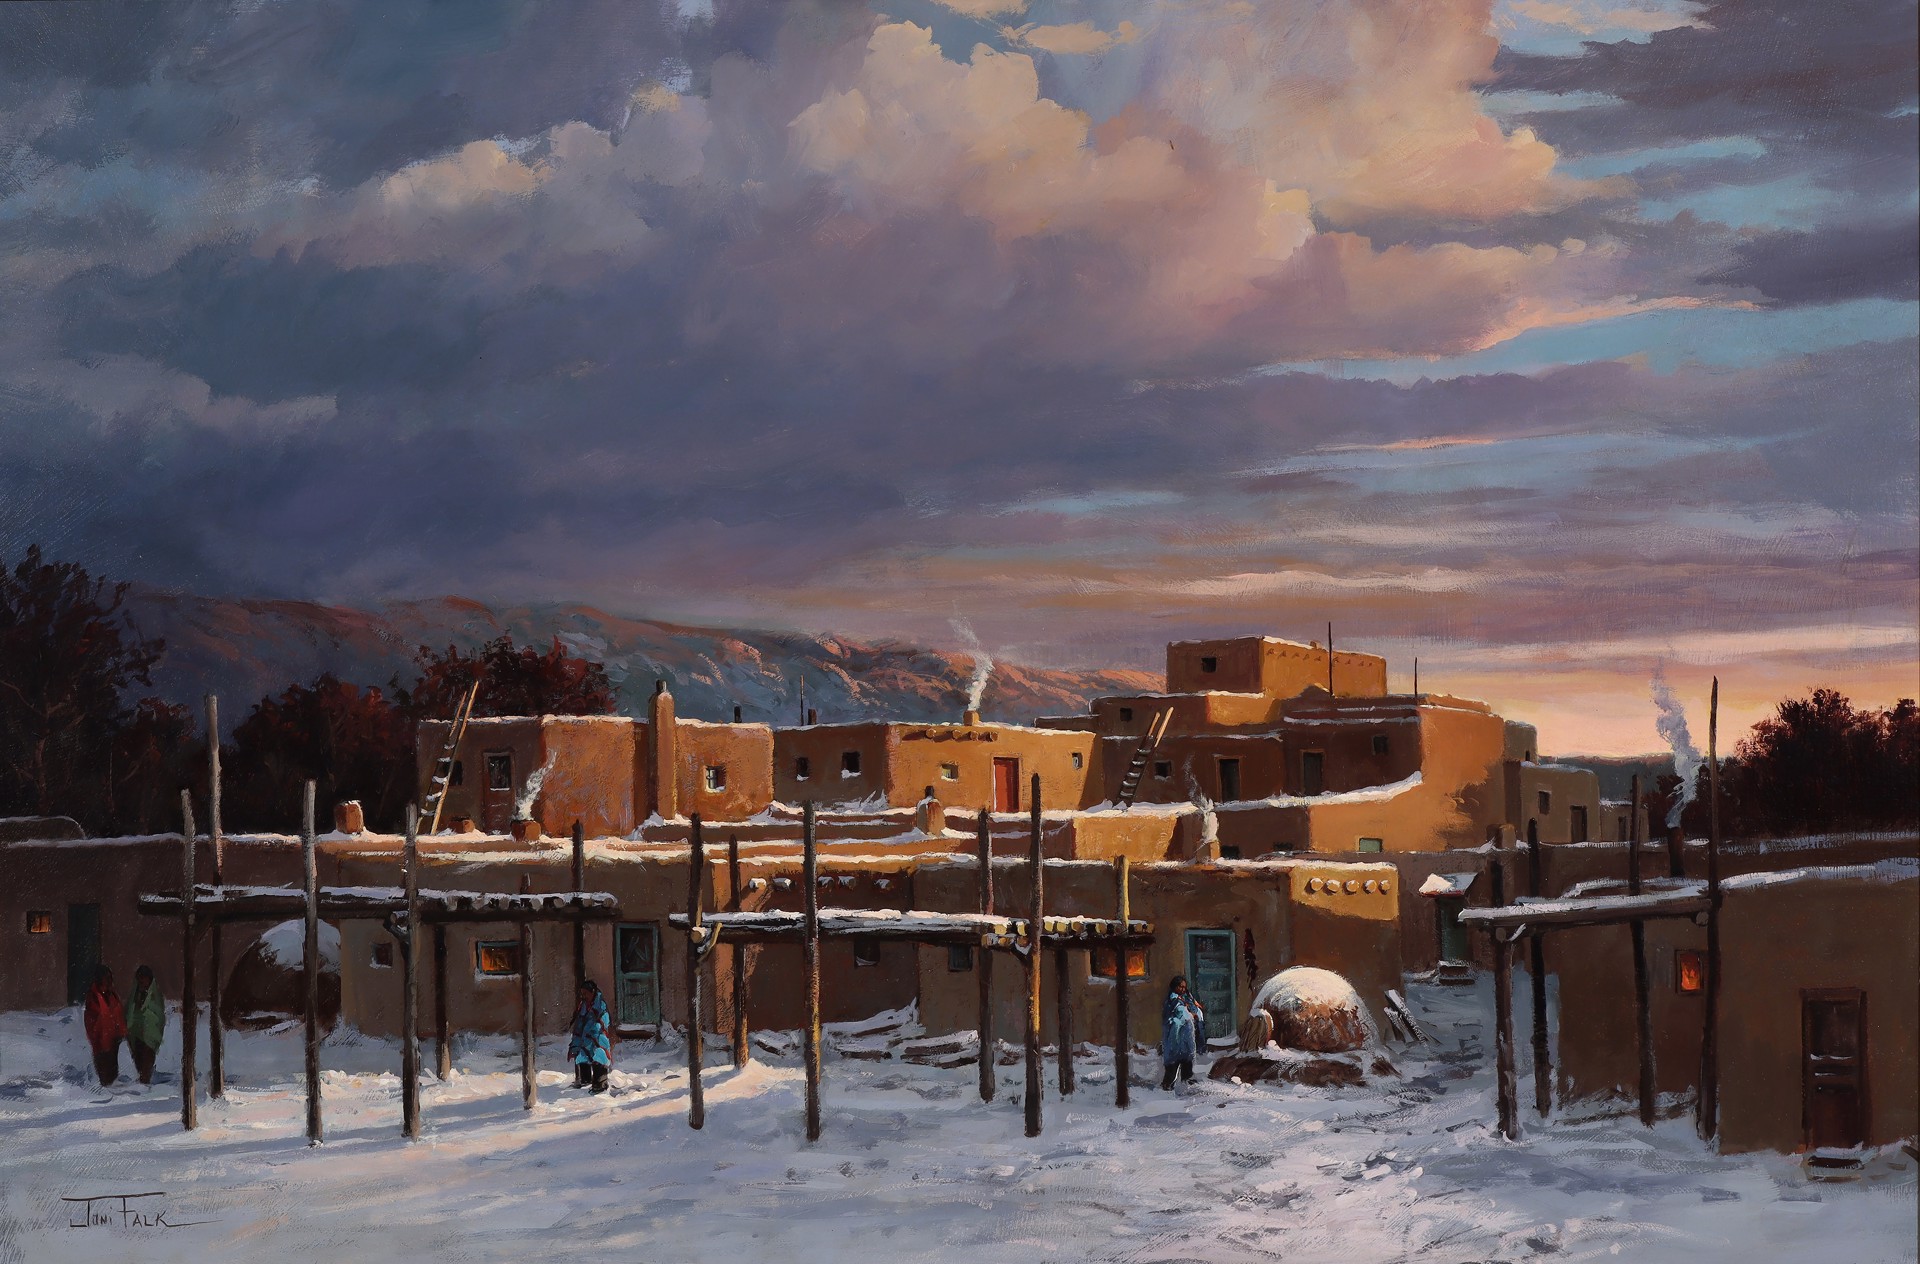 Days End at Taos Pueblo by Joni Falk